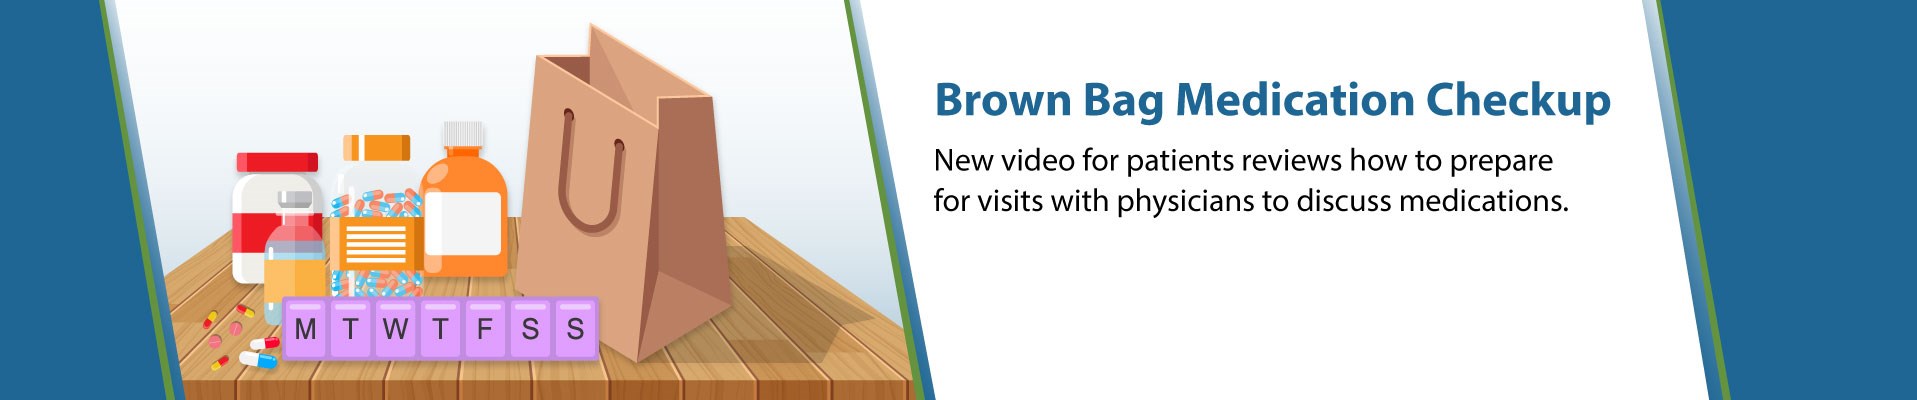 Brown Bag Medication Checkup